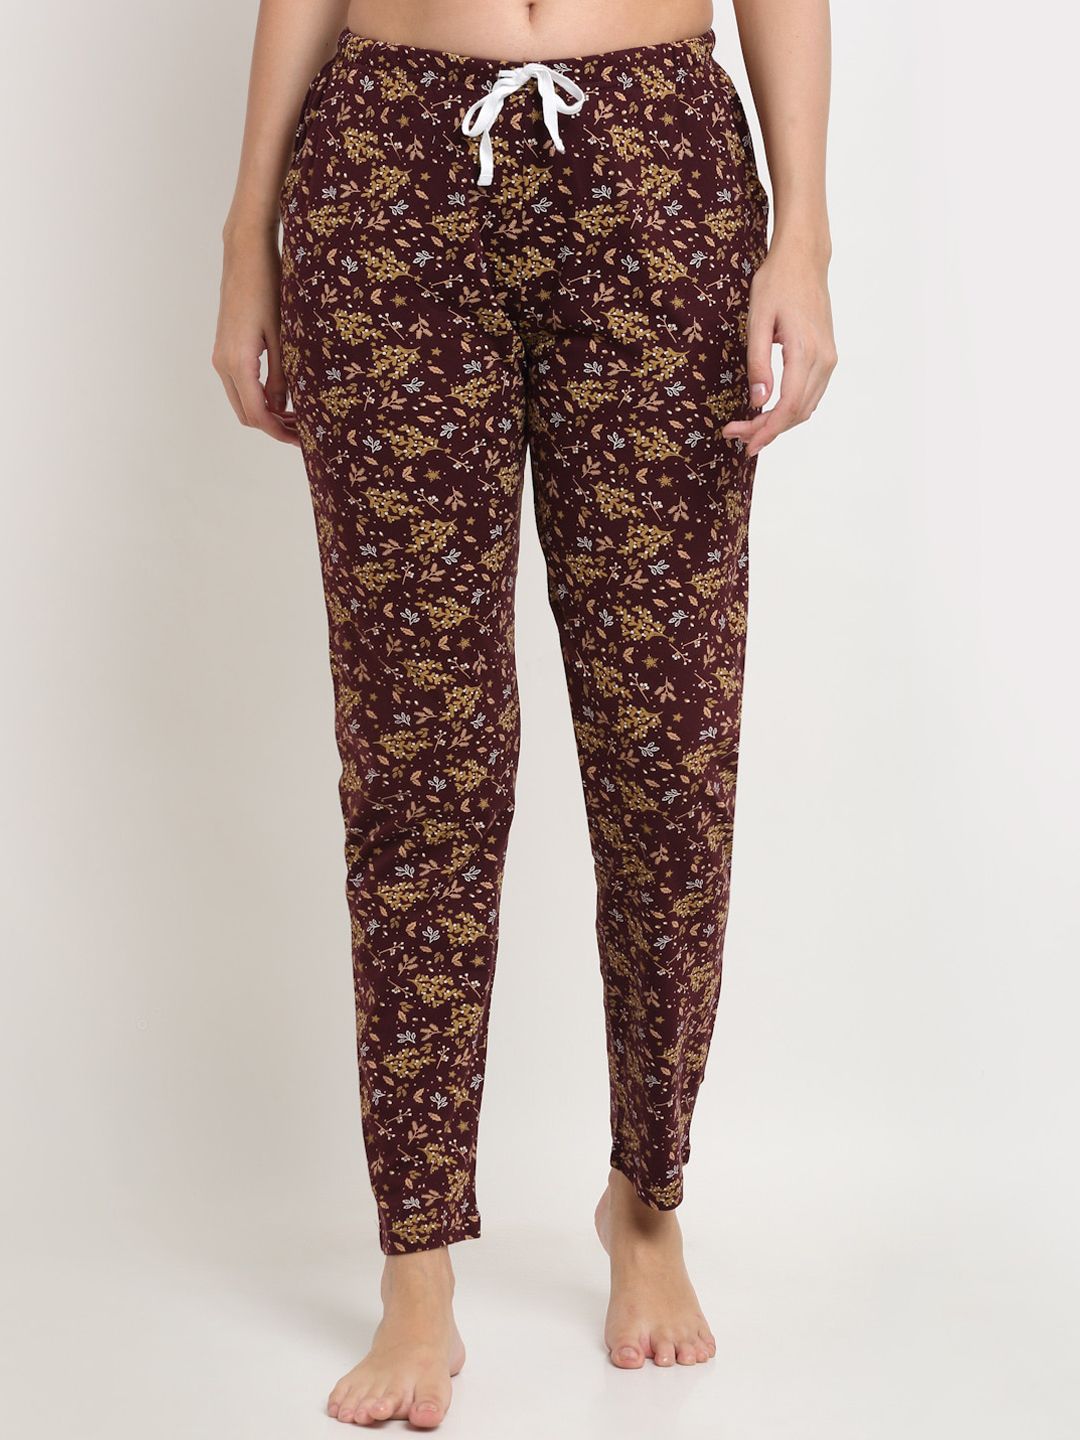 Kanvin Brown Floral Printed Lounge Pants Price in India